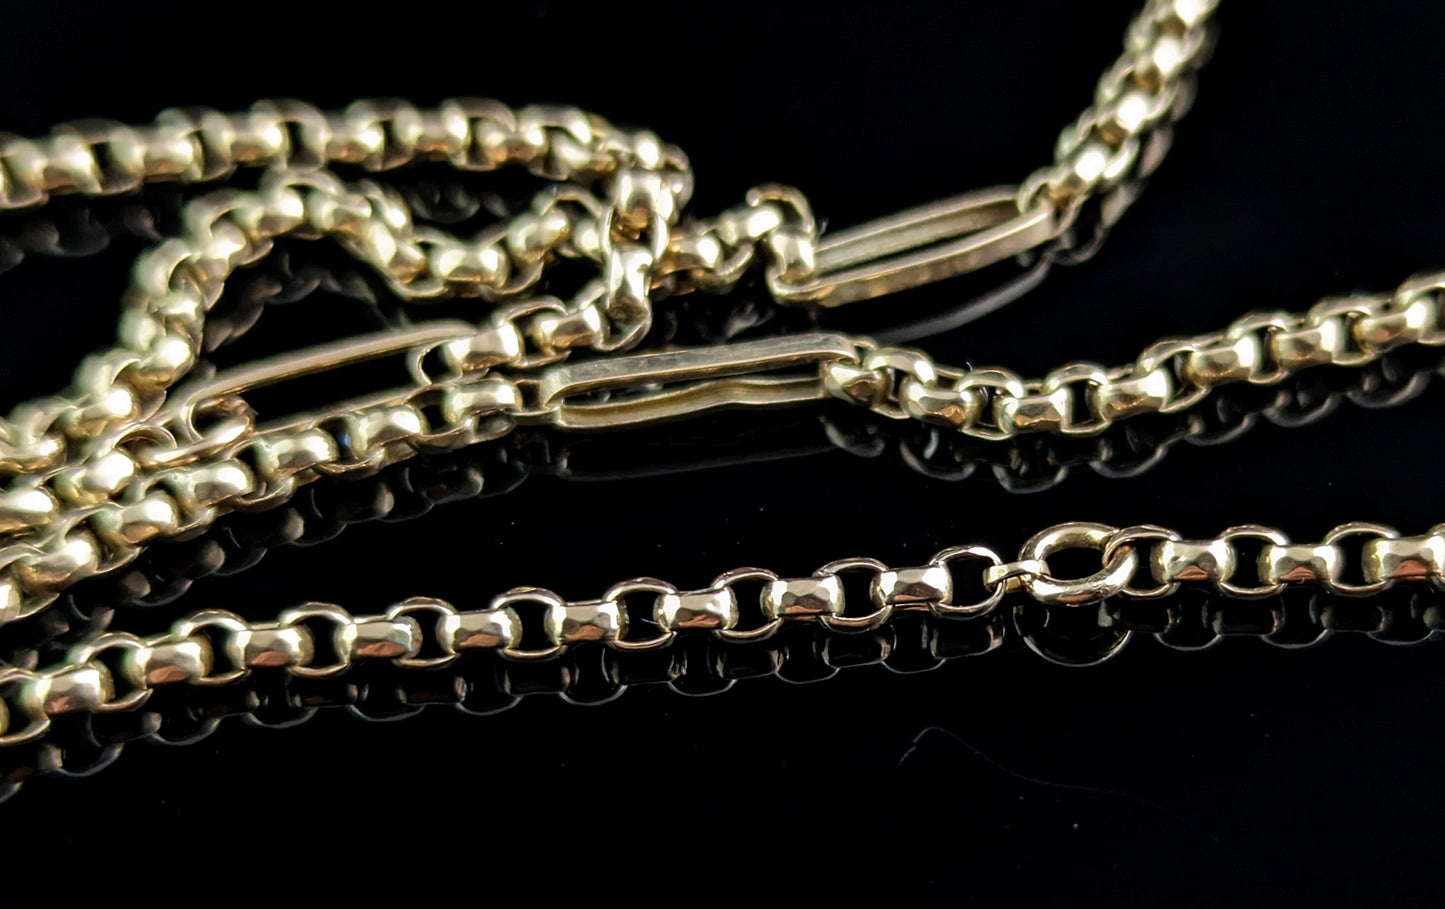 Antique 9ct gold fancy link long chain, longuard chain, Victorian